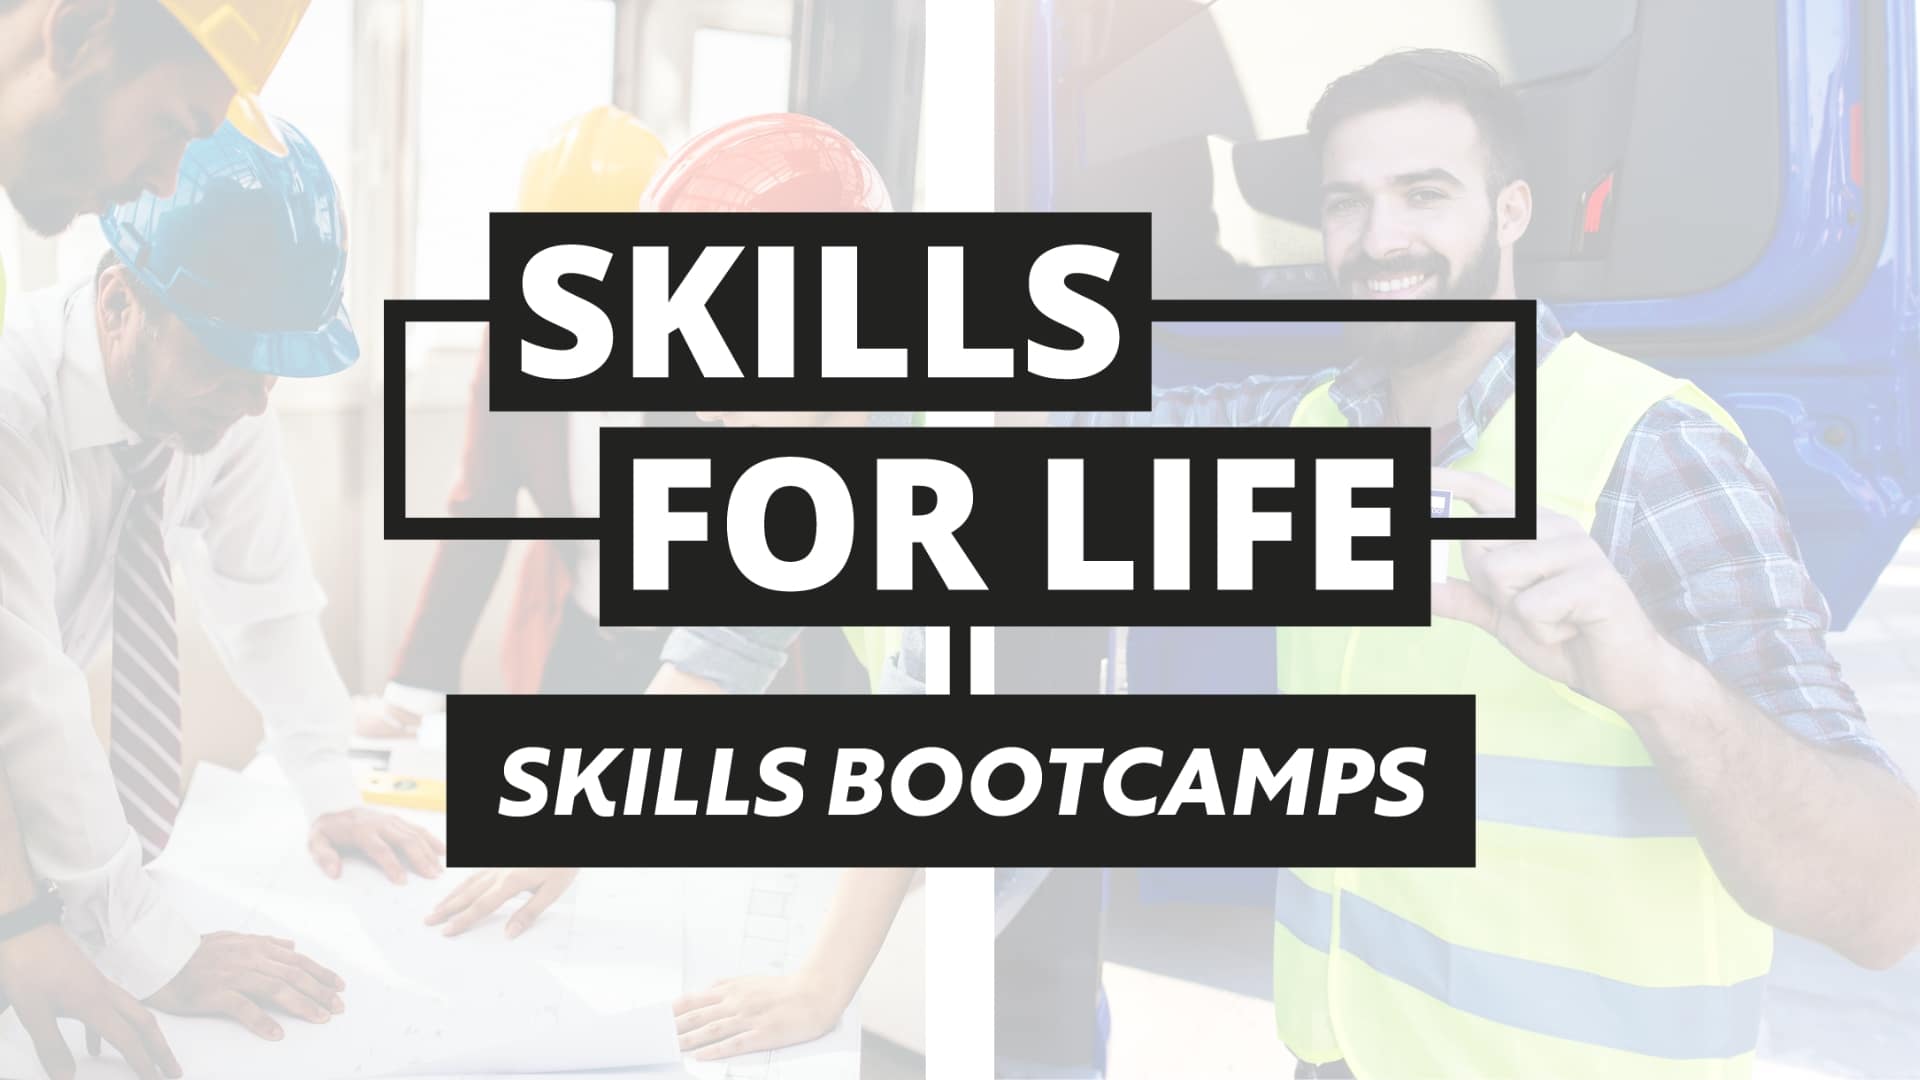 skills bootcamps